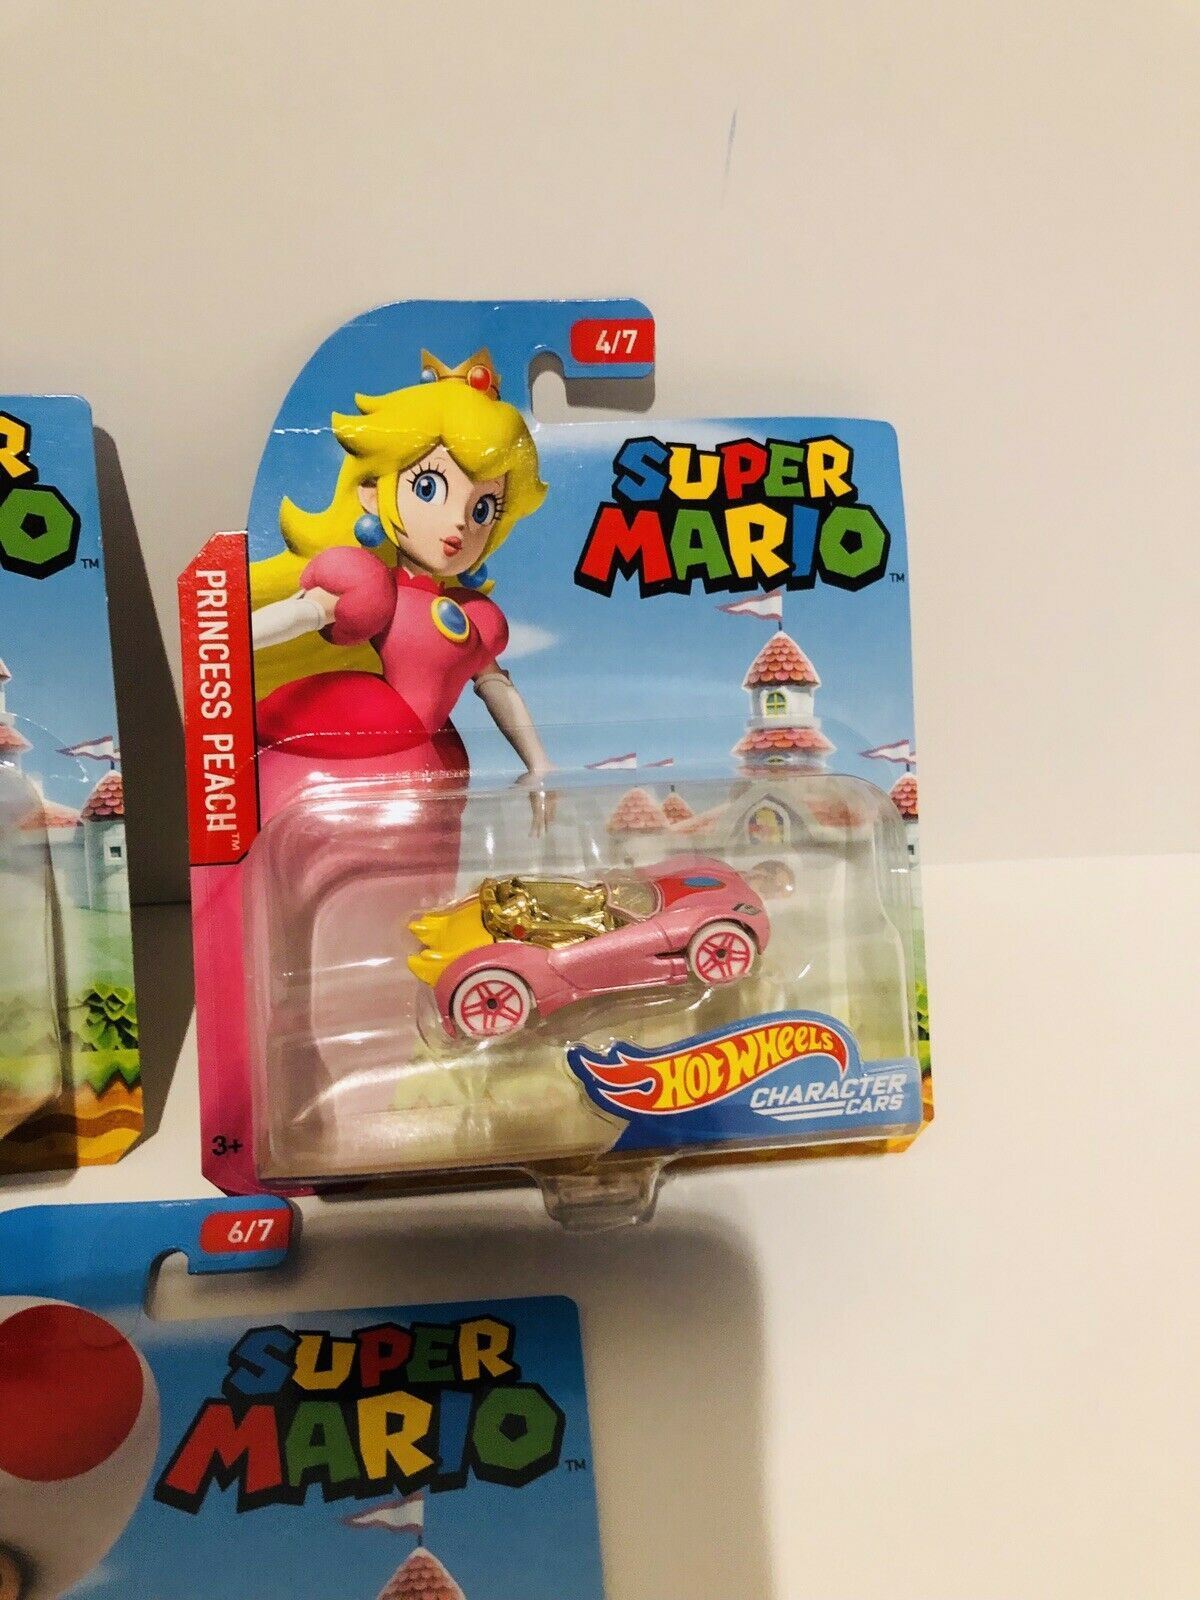 Hot Wheels Super Mario Character Cars Princess Peach 